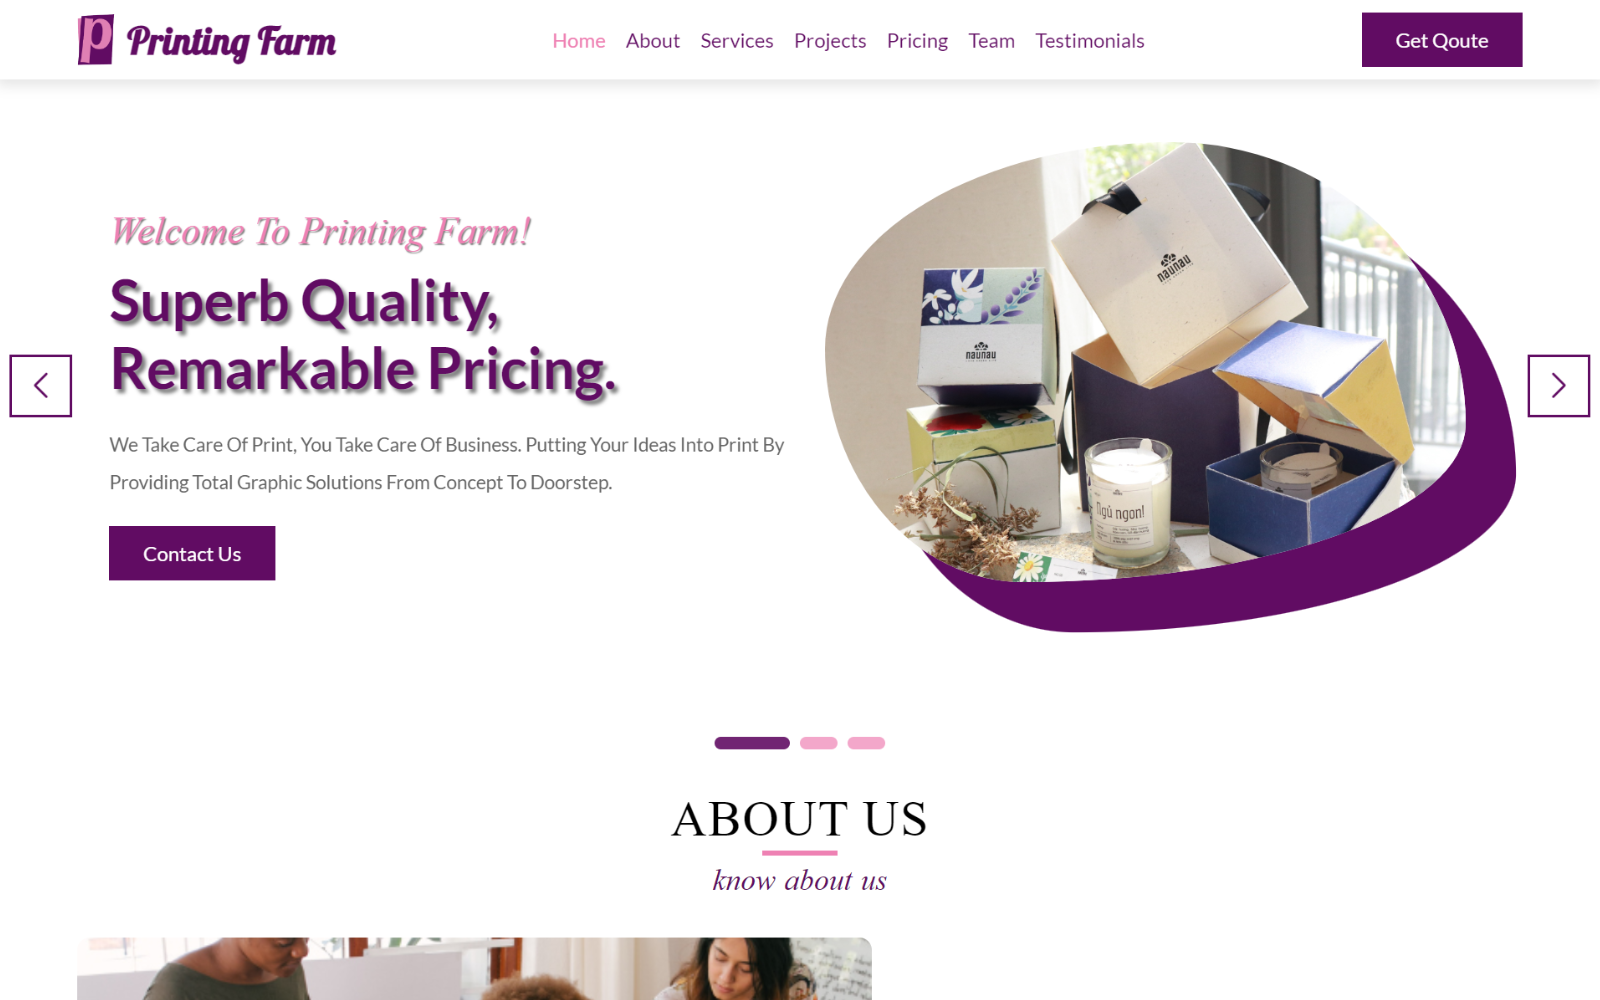 Printing Farm - Printing Company HTML5 Landing Page Template